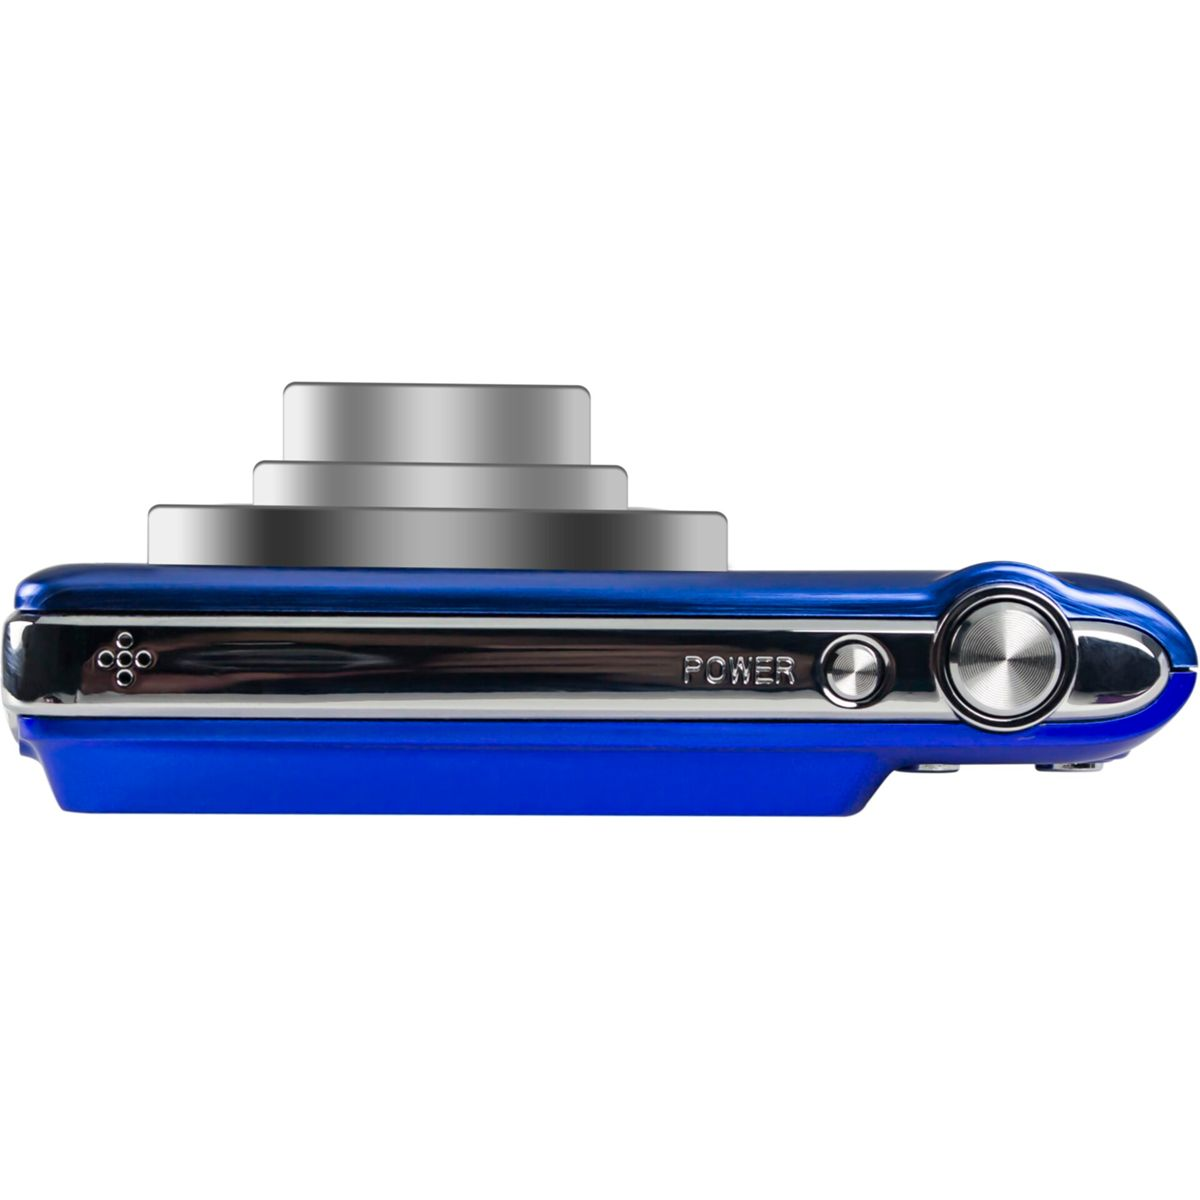 AGFAPHOTO Digitalkamera mit 8 x blau, TFT- LCD blau LCD-Backlight DC8200 Realishot Zoom, opt.